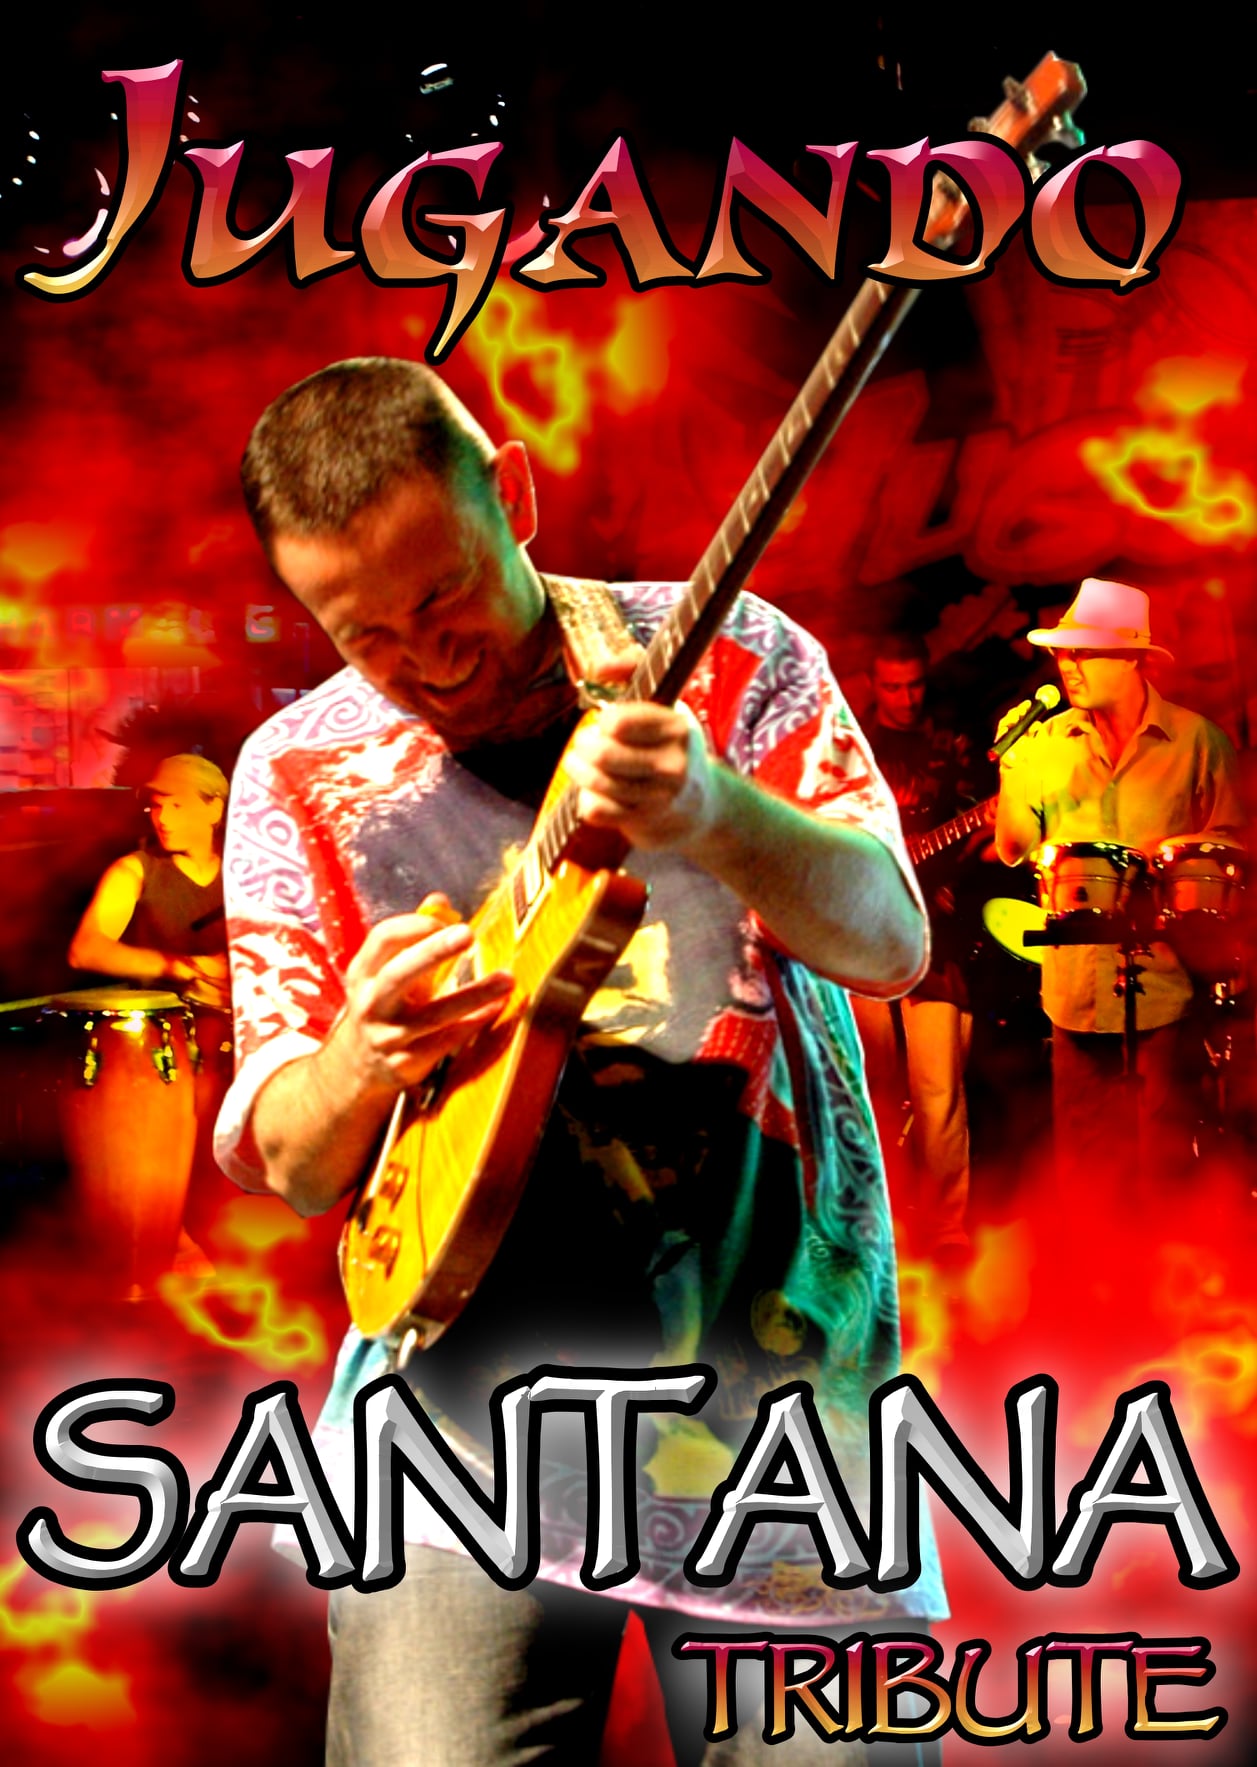 Affiche Jugando tribute santana live band groupe musique concerts